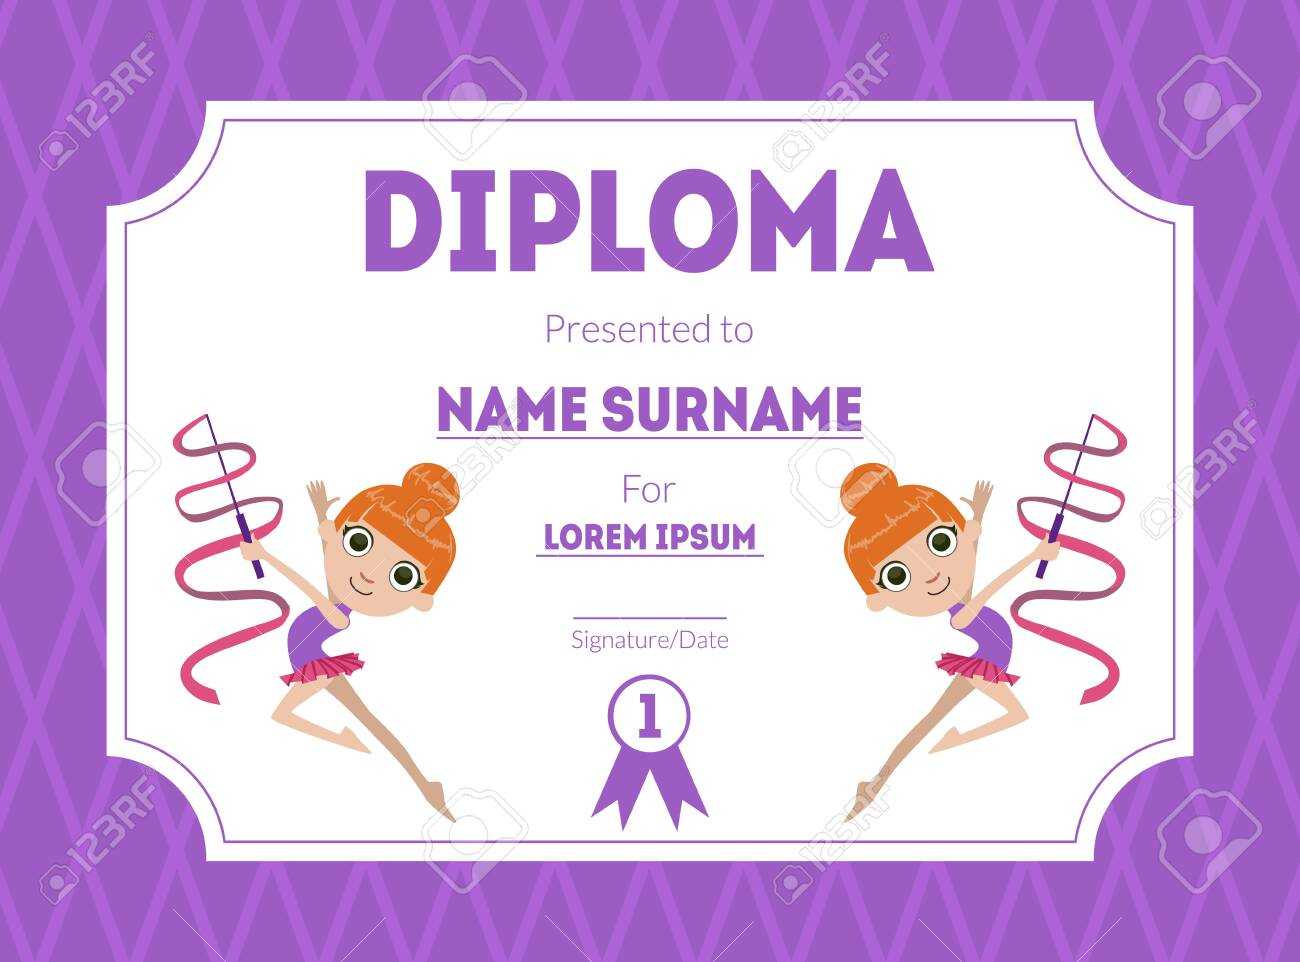 Sports Award Diploma Template, Kids Certificate With Gymnast.. With Regard To Gymnastics Certificate Template